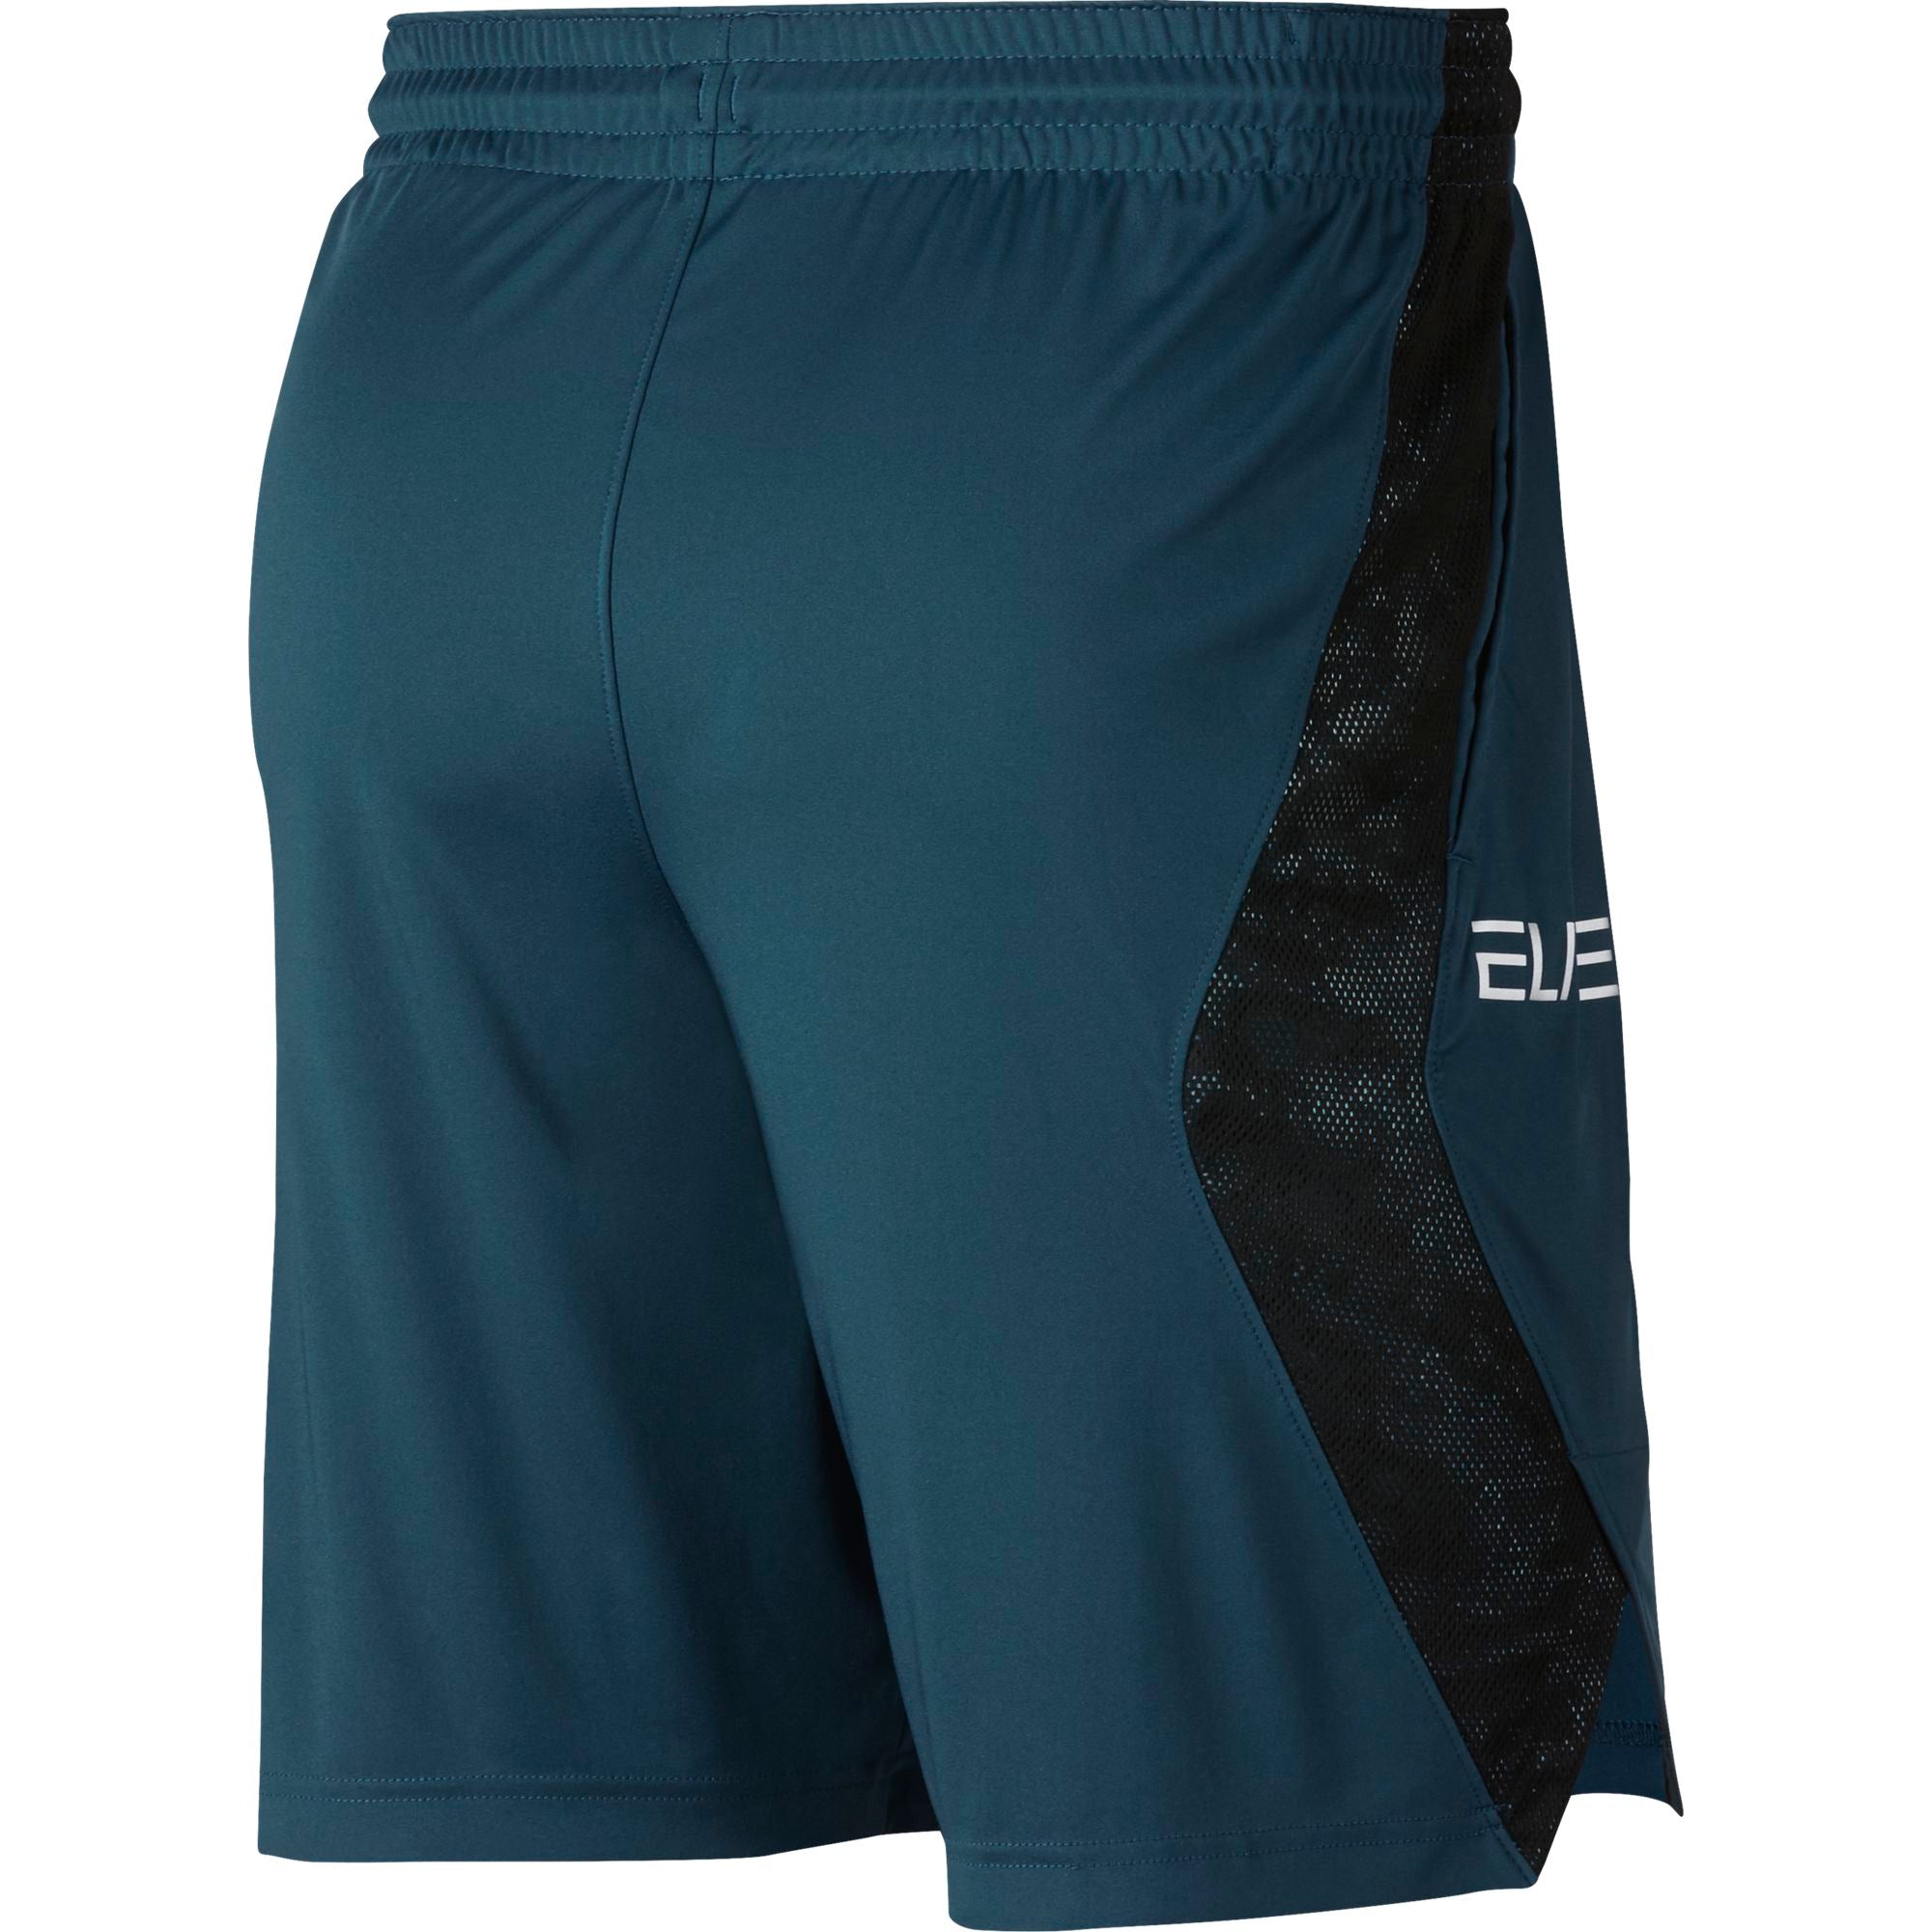 Nike Basketball Dry Shorts - Space Blue/Black/White